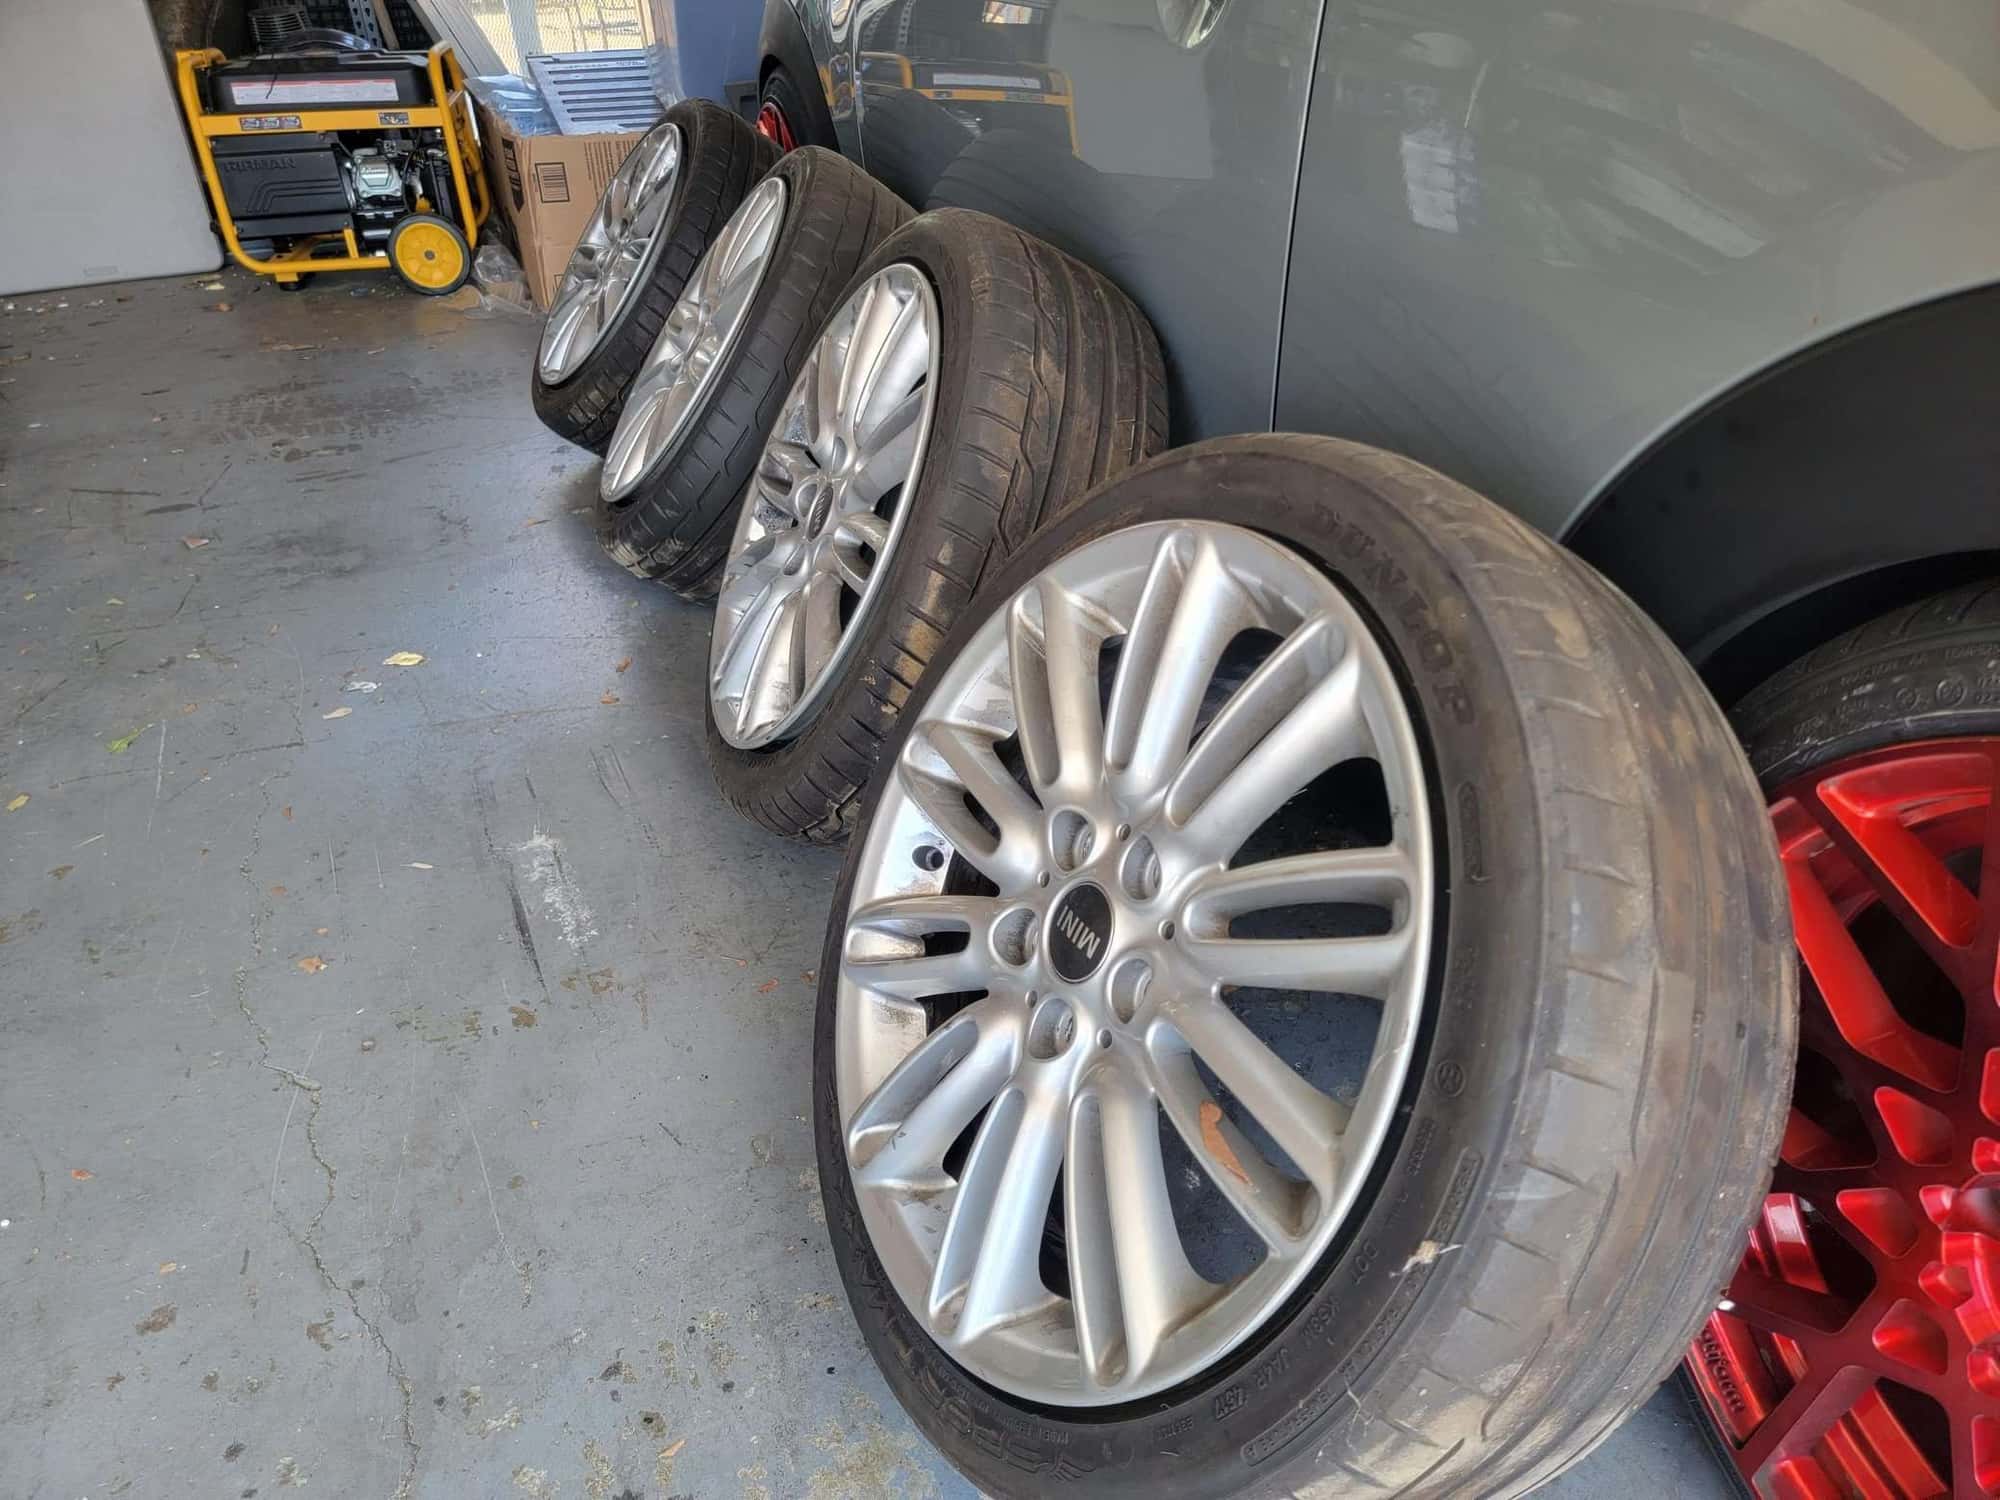 Wheels and Tires/Axles - OEM 17" Tentacle spoke Wheels w/ OEM Tires + MINI Wheel caps - Used - 2015 to 2023 Mini F56: Mini Hatch/Hardtop - Simi Valley, CA 93065, United States